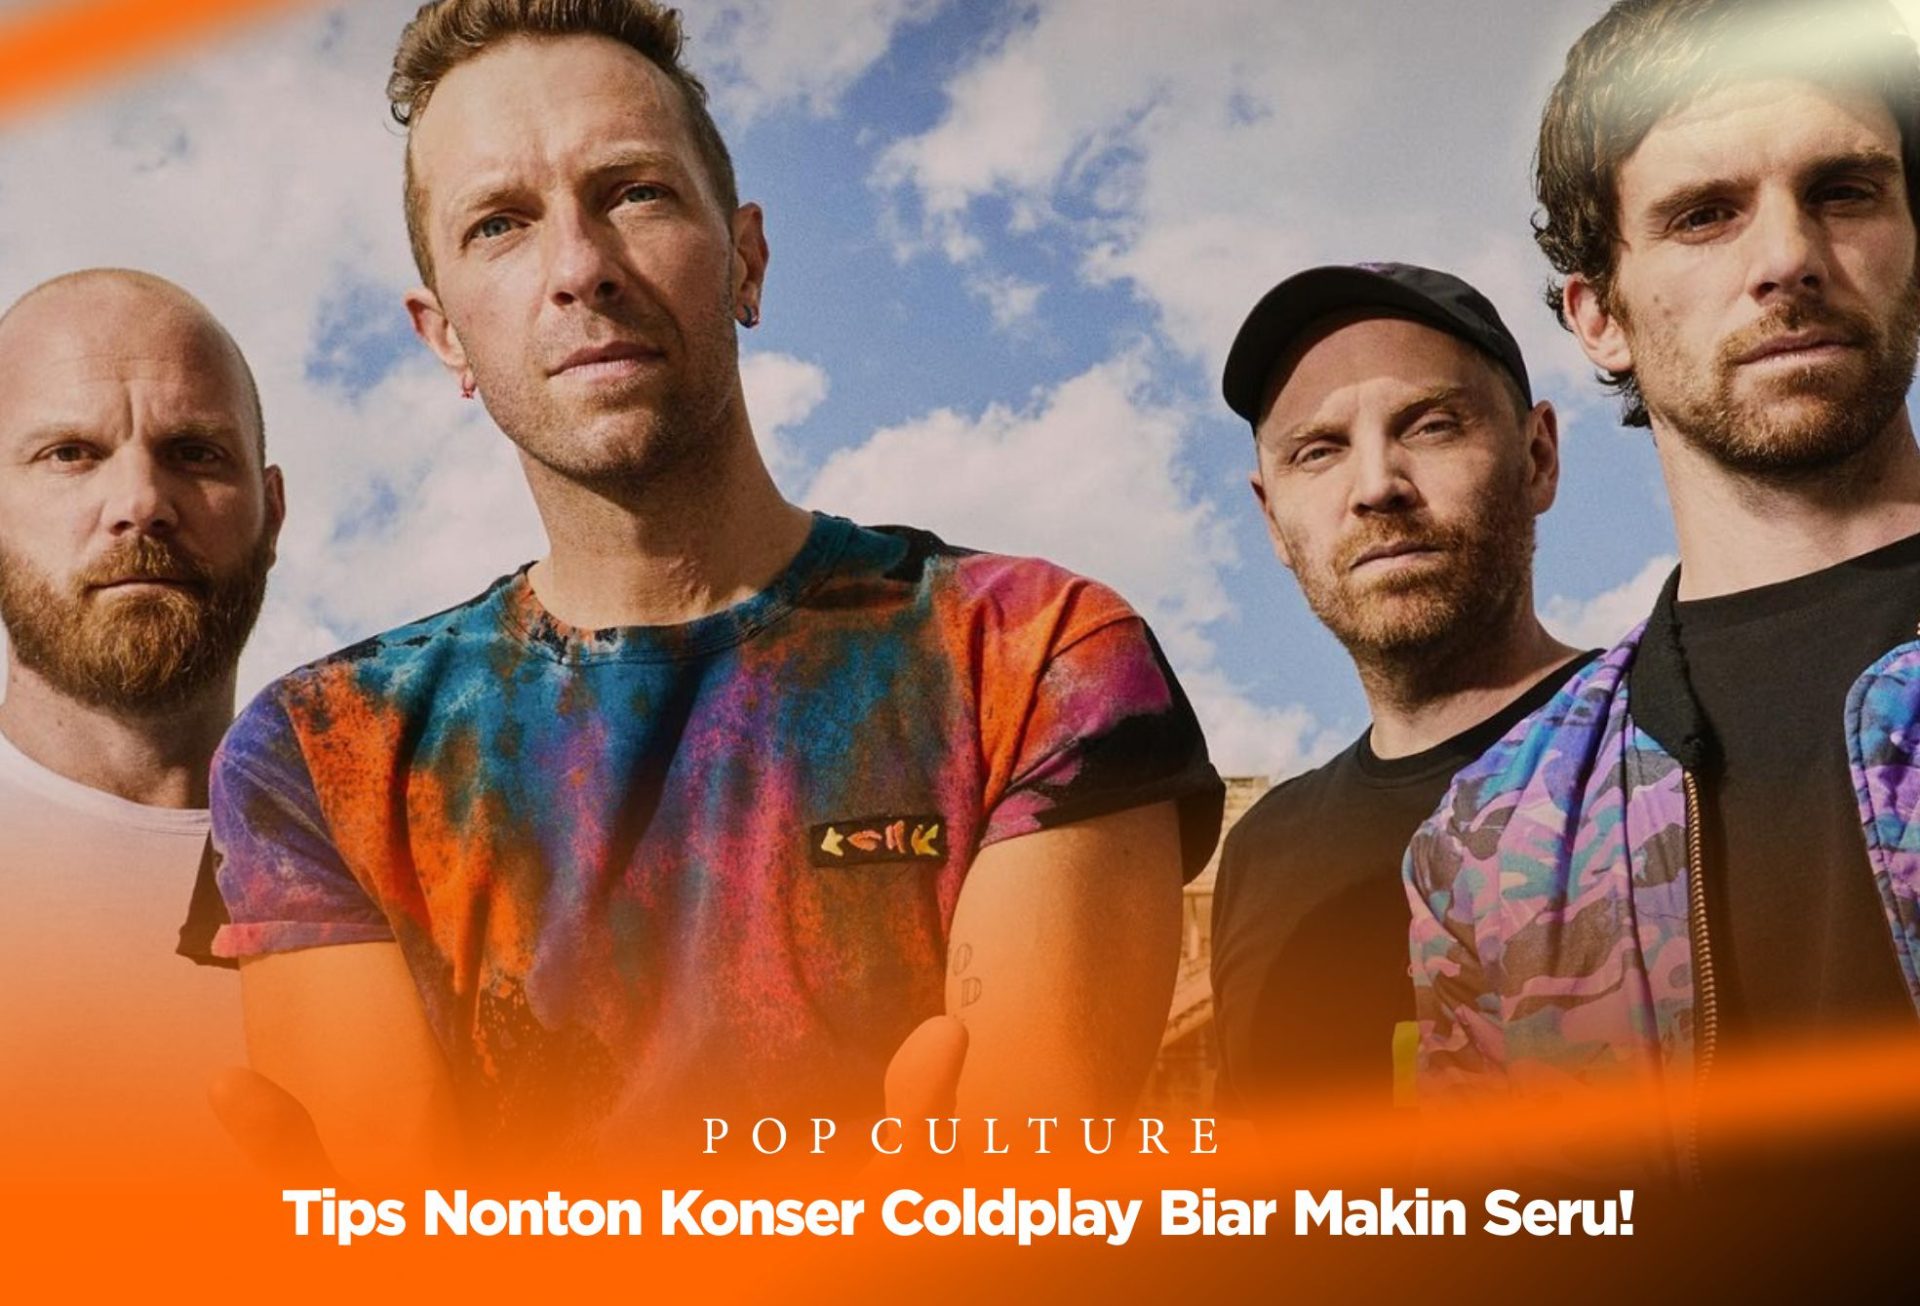 Tips Nonton Konser Coldplay Biar Makin Seru